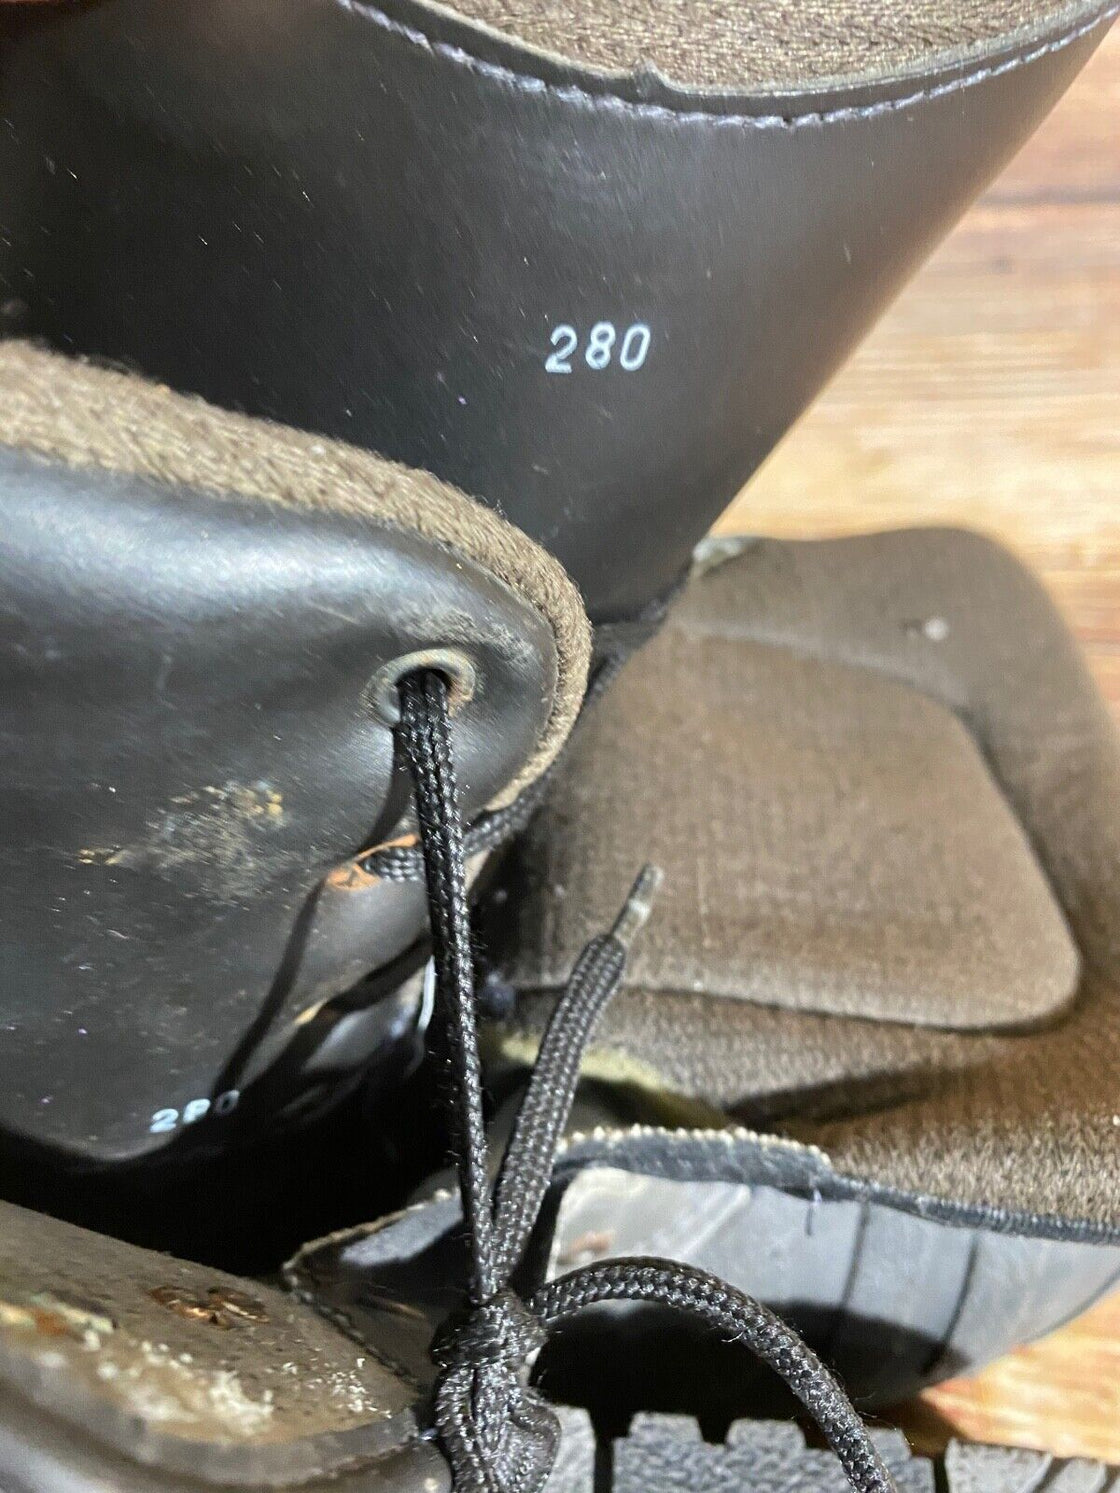 Crazy Creek Snowboard Vintage Boots Size EU43, US10, UK9, Mondo 275 mm F